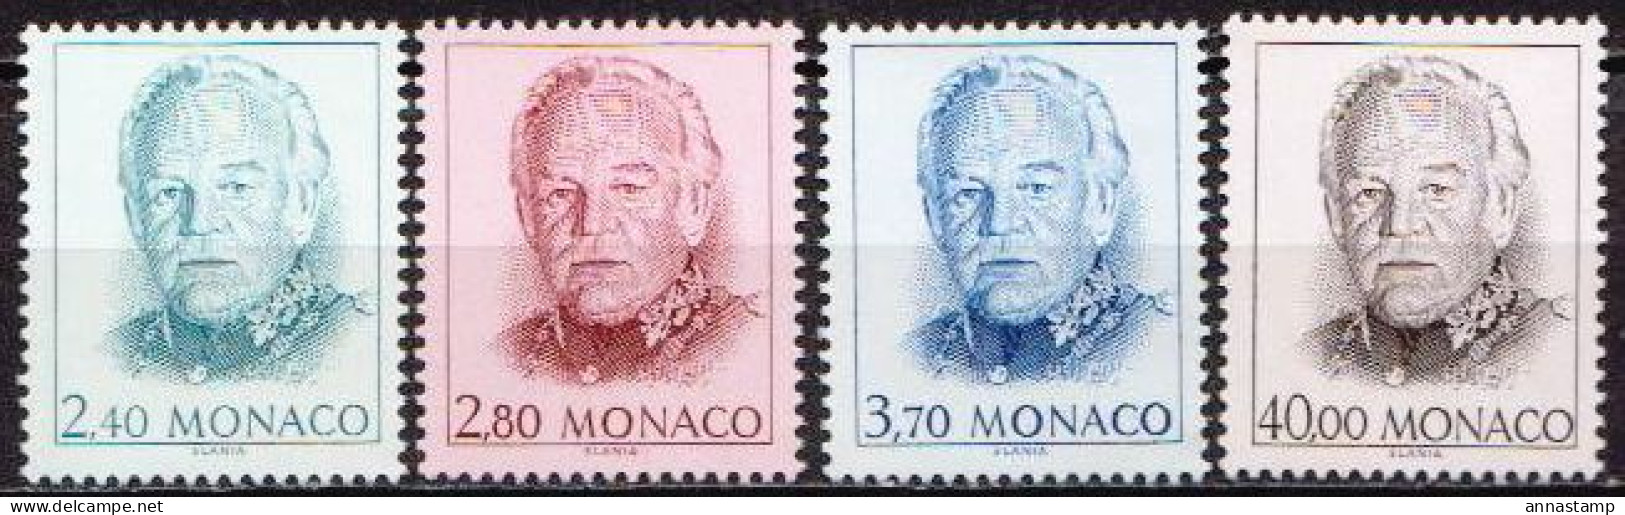 Monaco MNH Set - Royalties, Royals